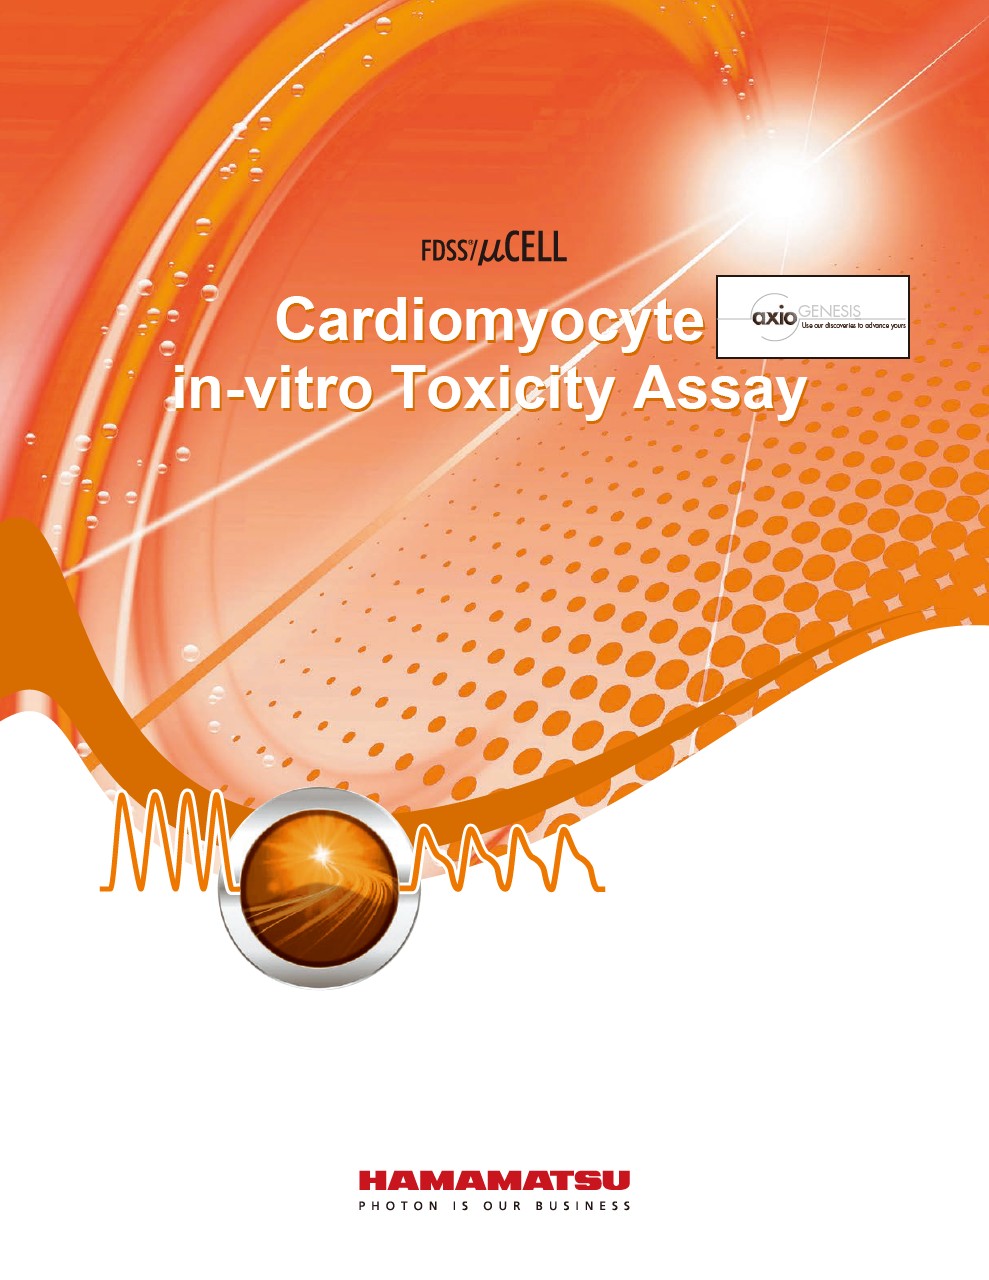 FDSS/μCELL Cardiomyocyte in-vitro Toxicity Assay [Axiogenesis ver.]